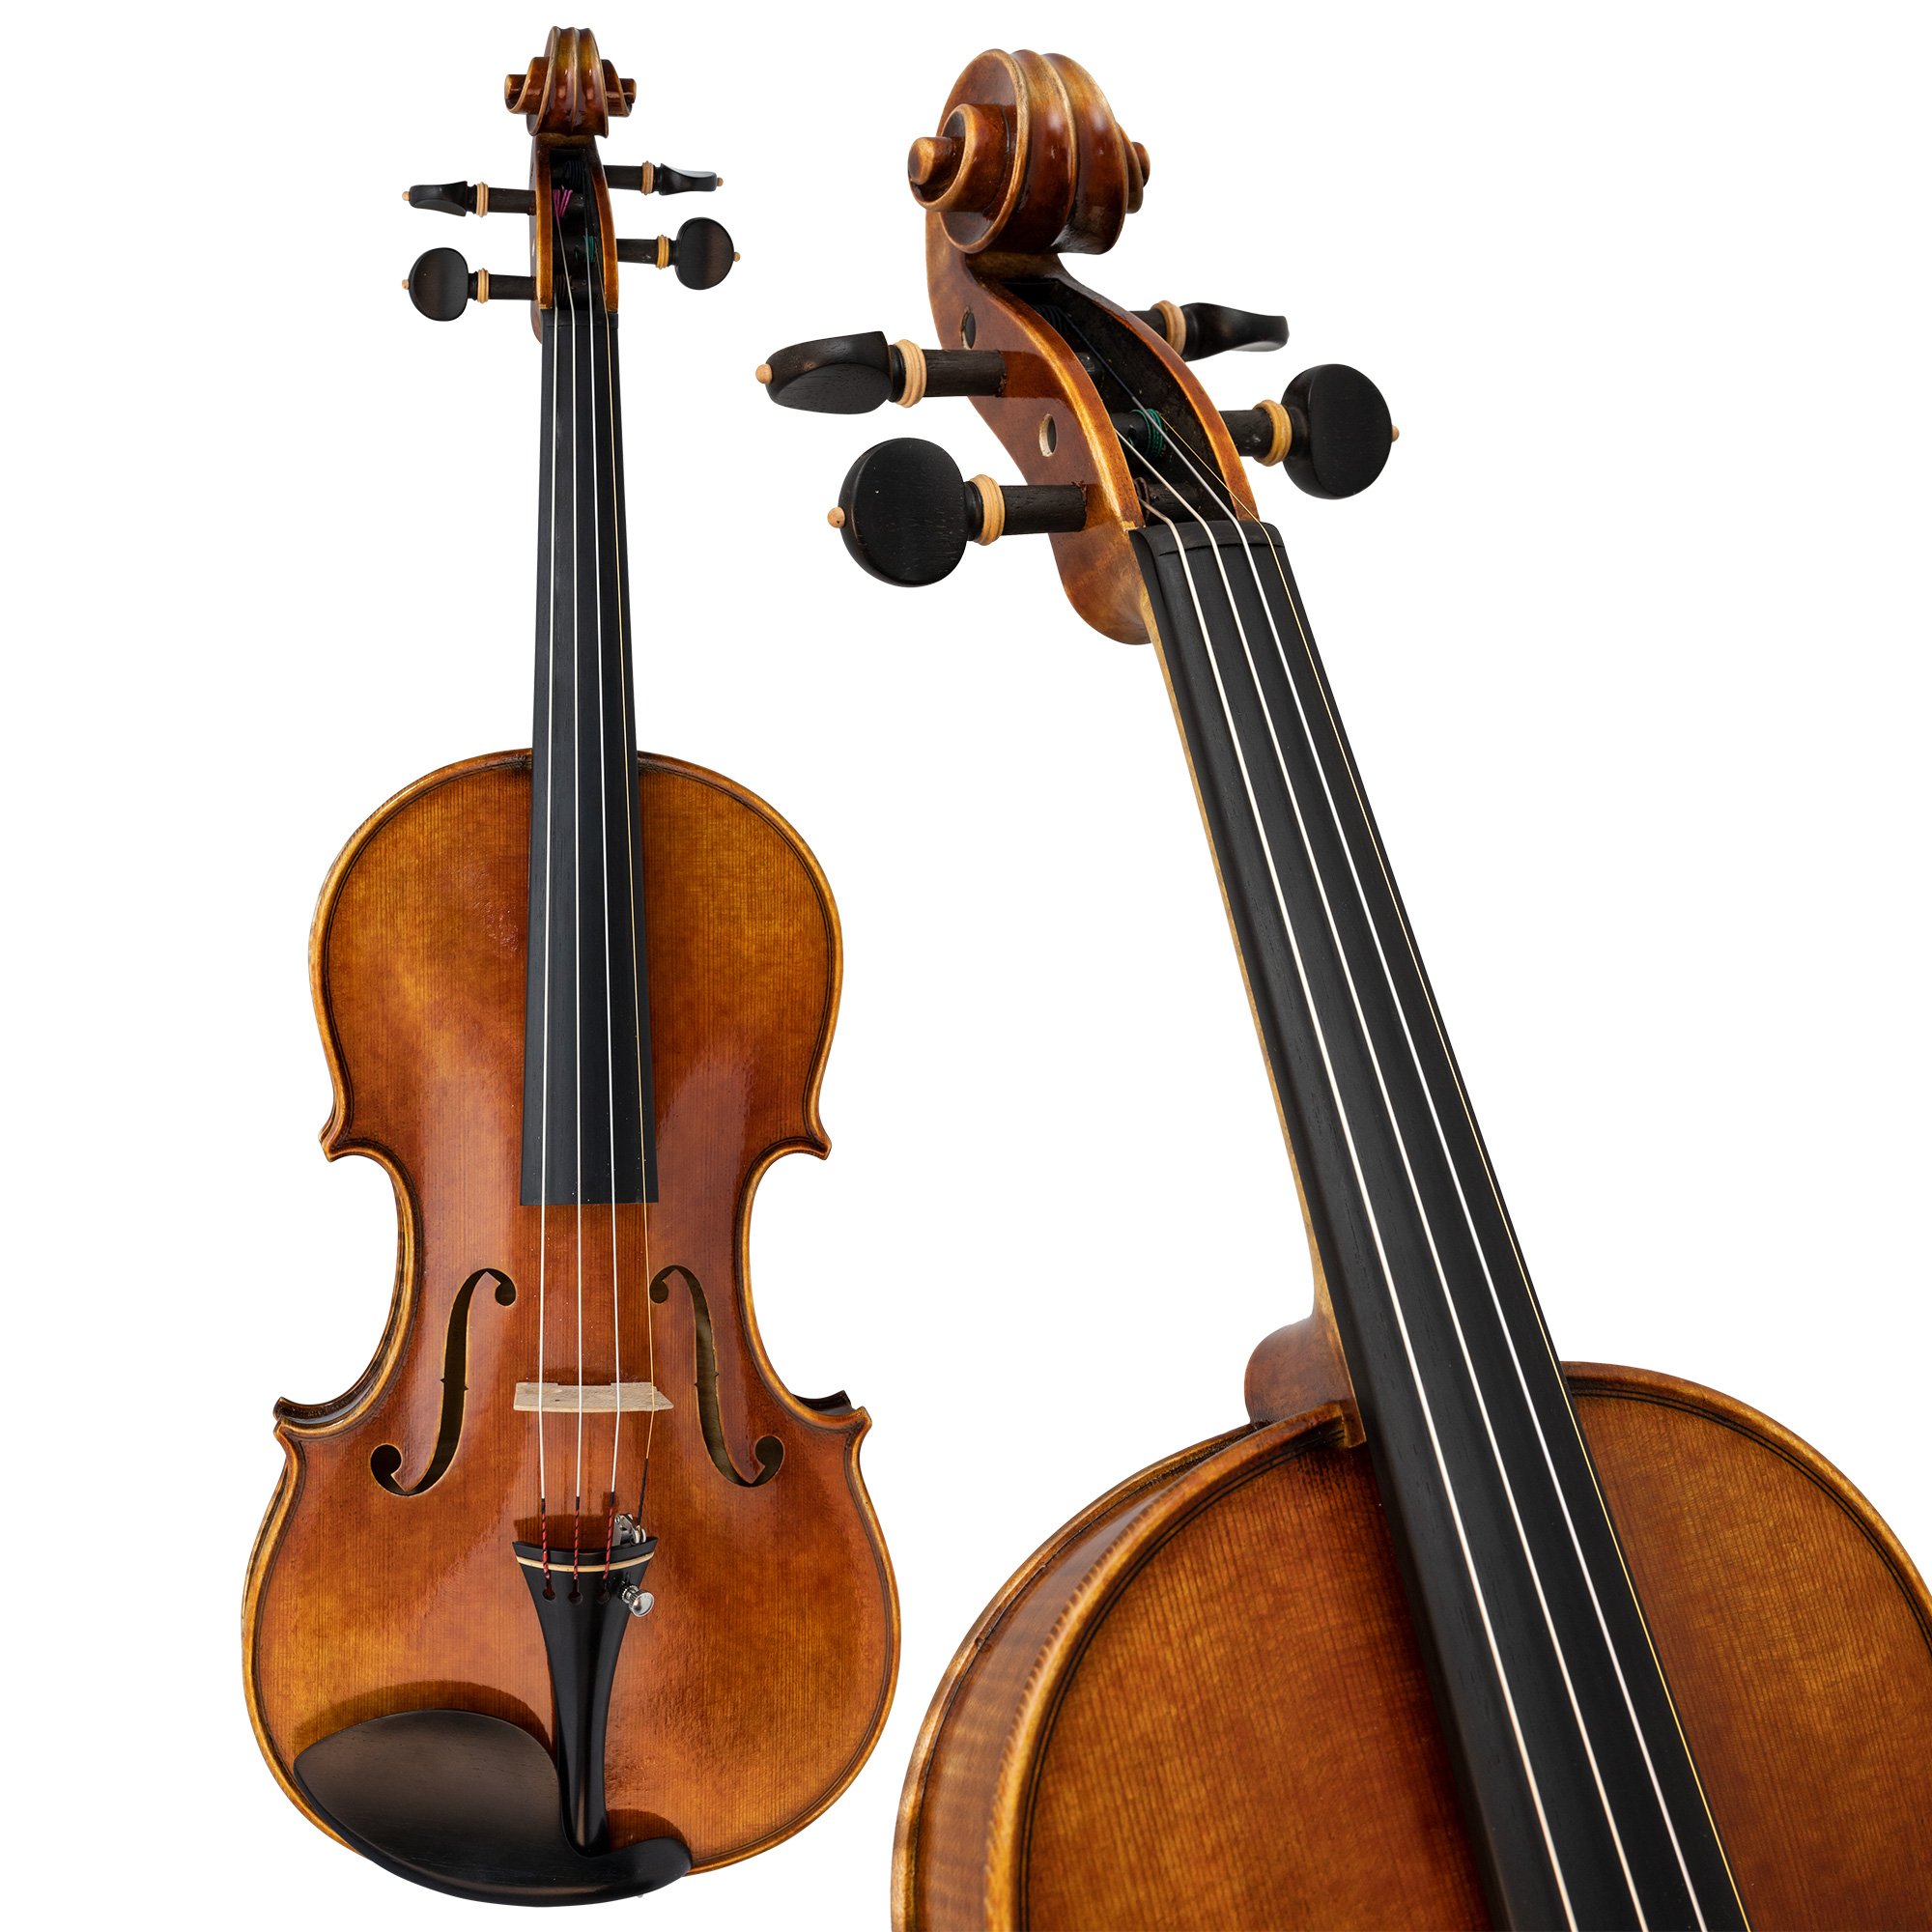 Zubak Master Series Violin in action